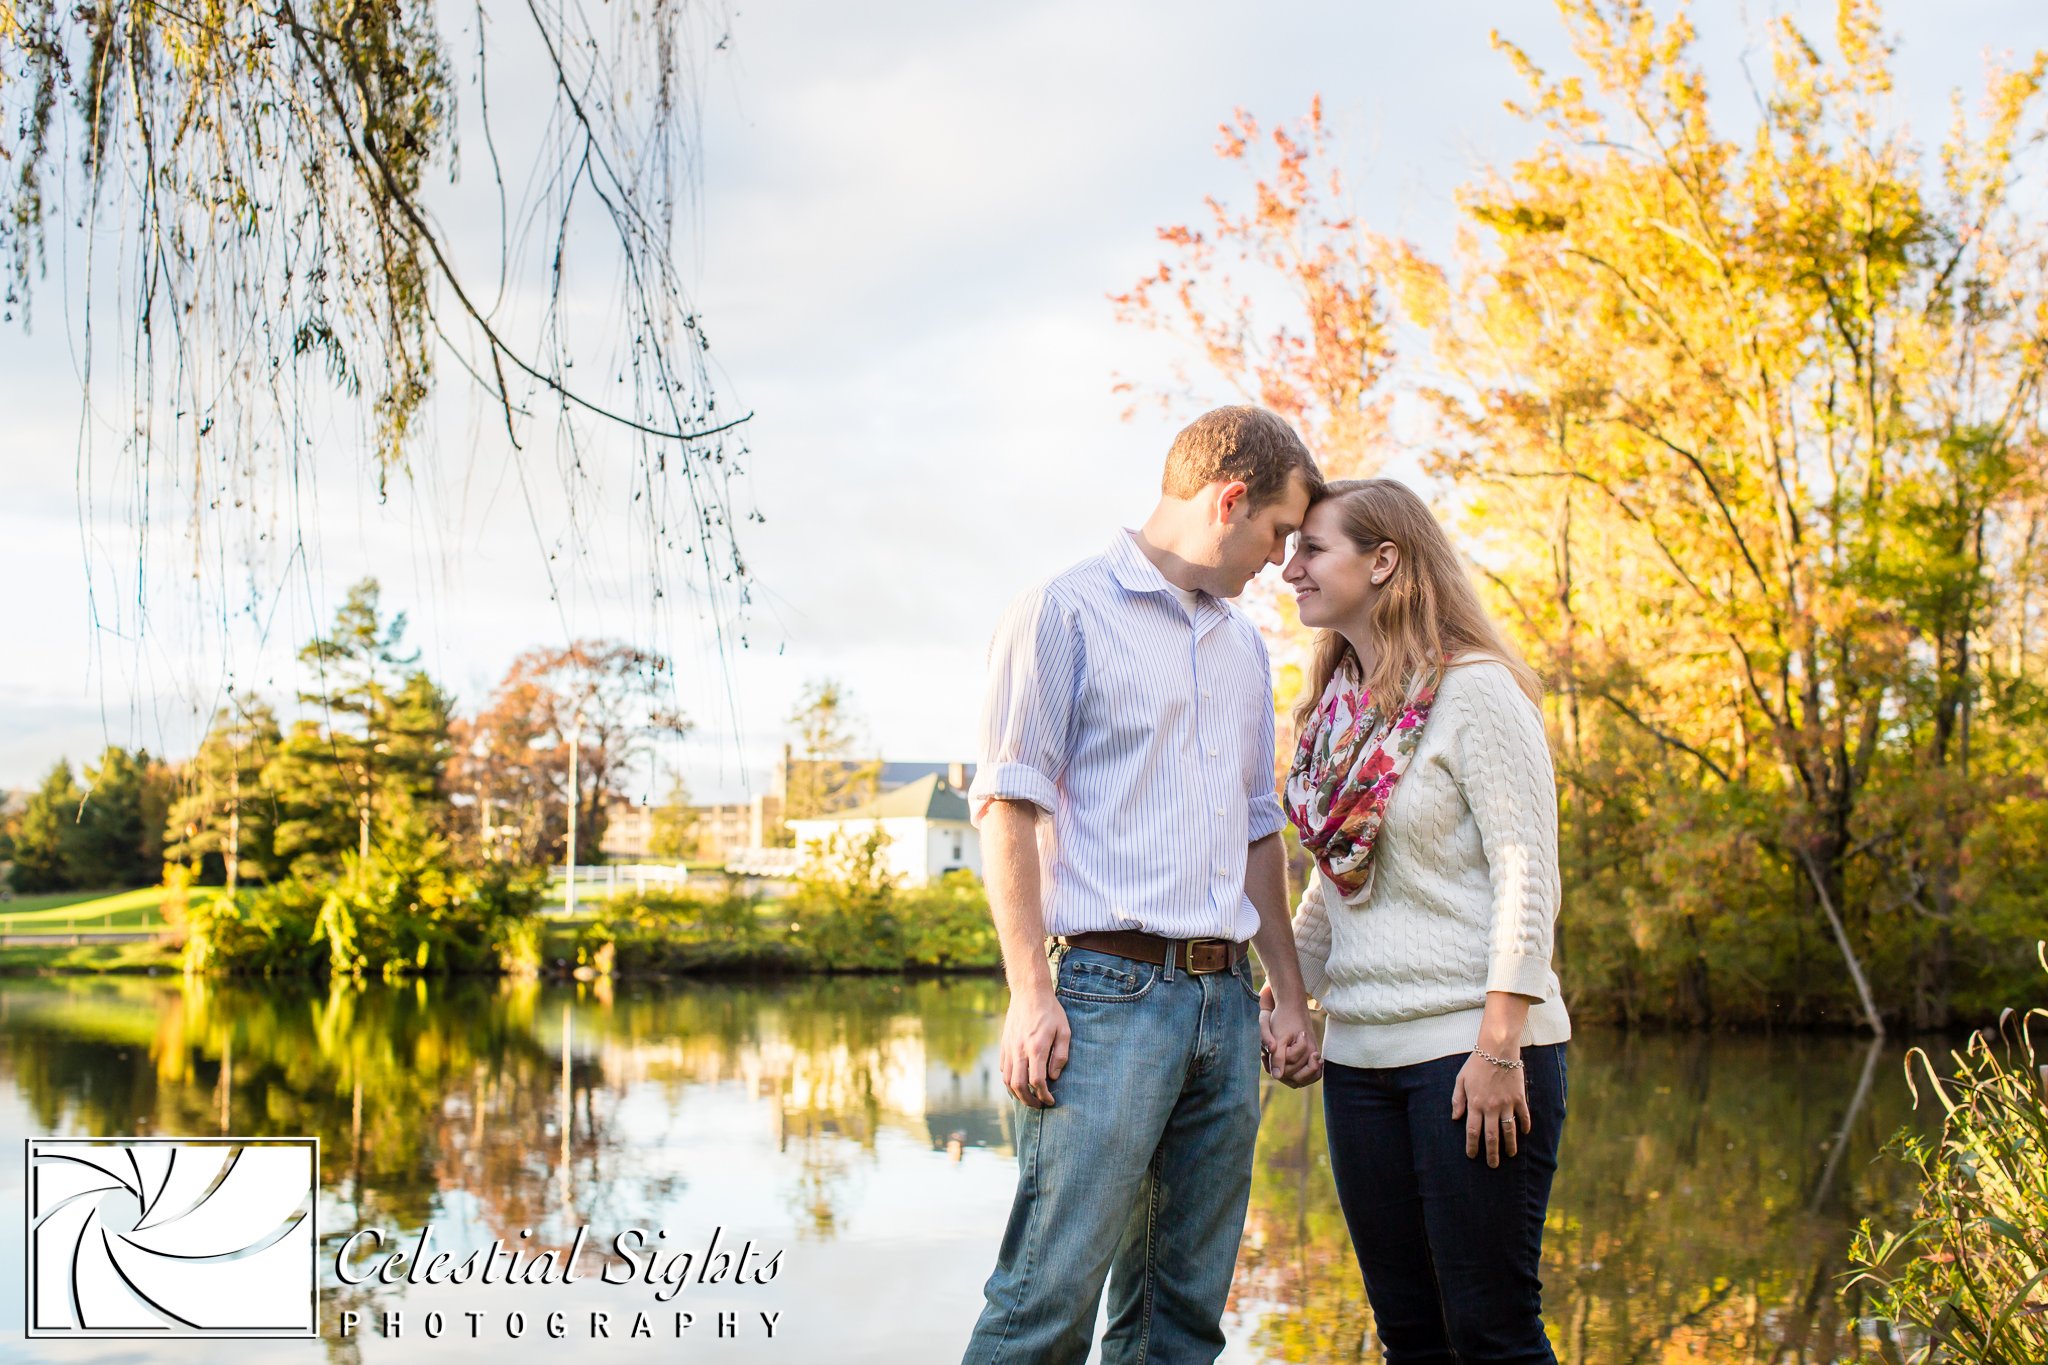 Katie & Brent {Engaged} - Wedding Photography - Wedding Photographer ...